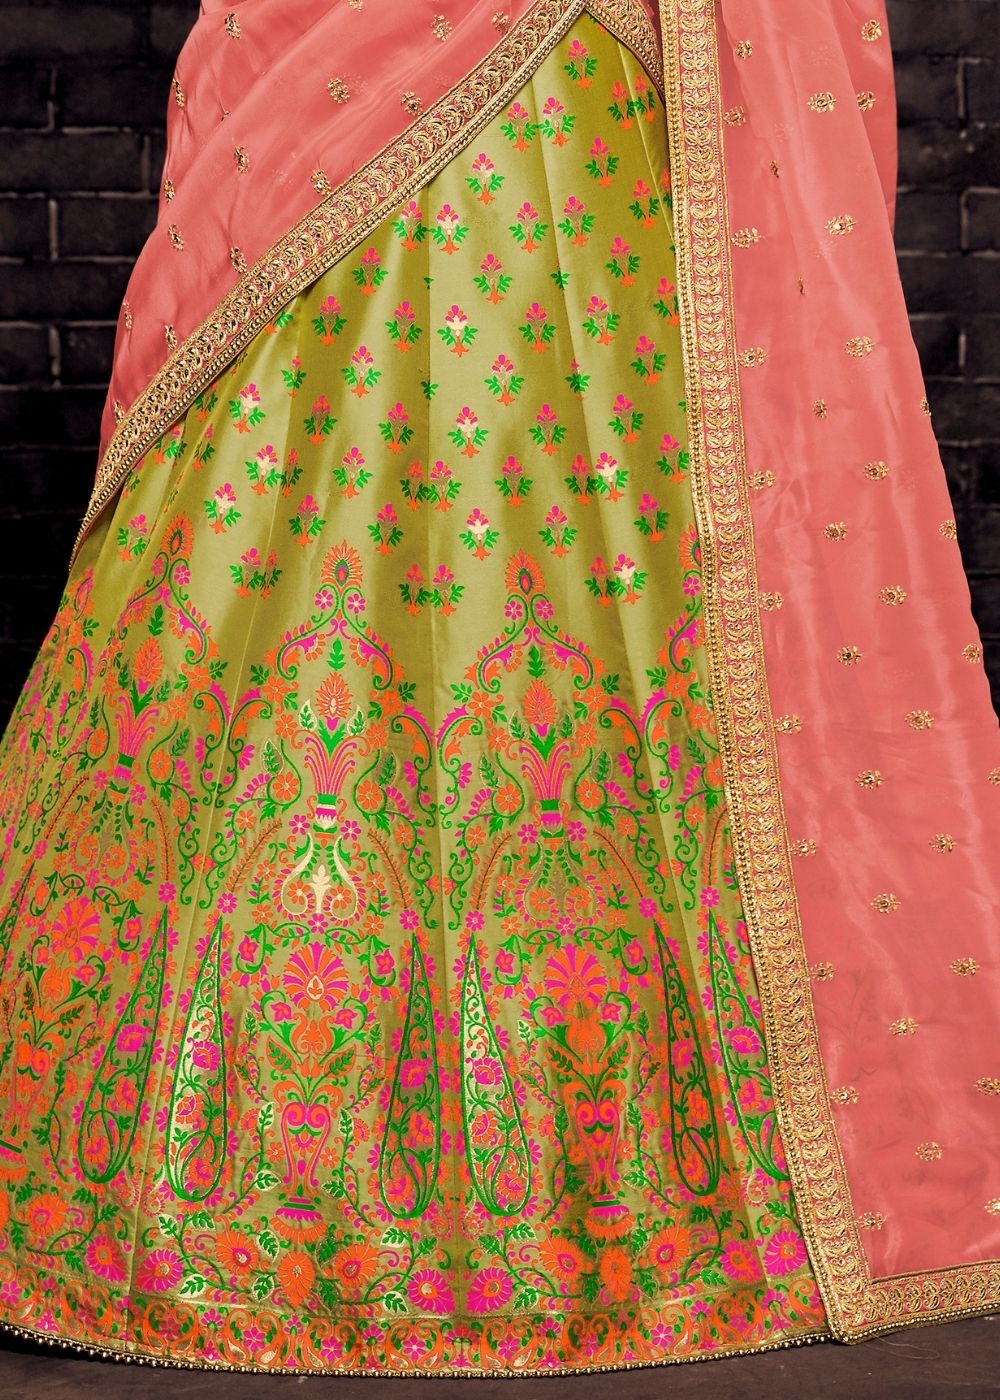 Rama Green Ruffle Lehenga Choli Lengha Chunri Skirt Top With Embroidery  Blouse | eBay